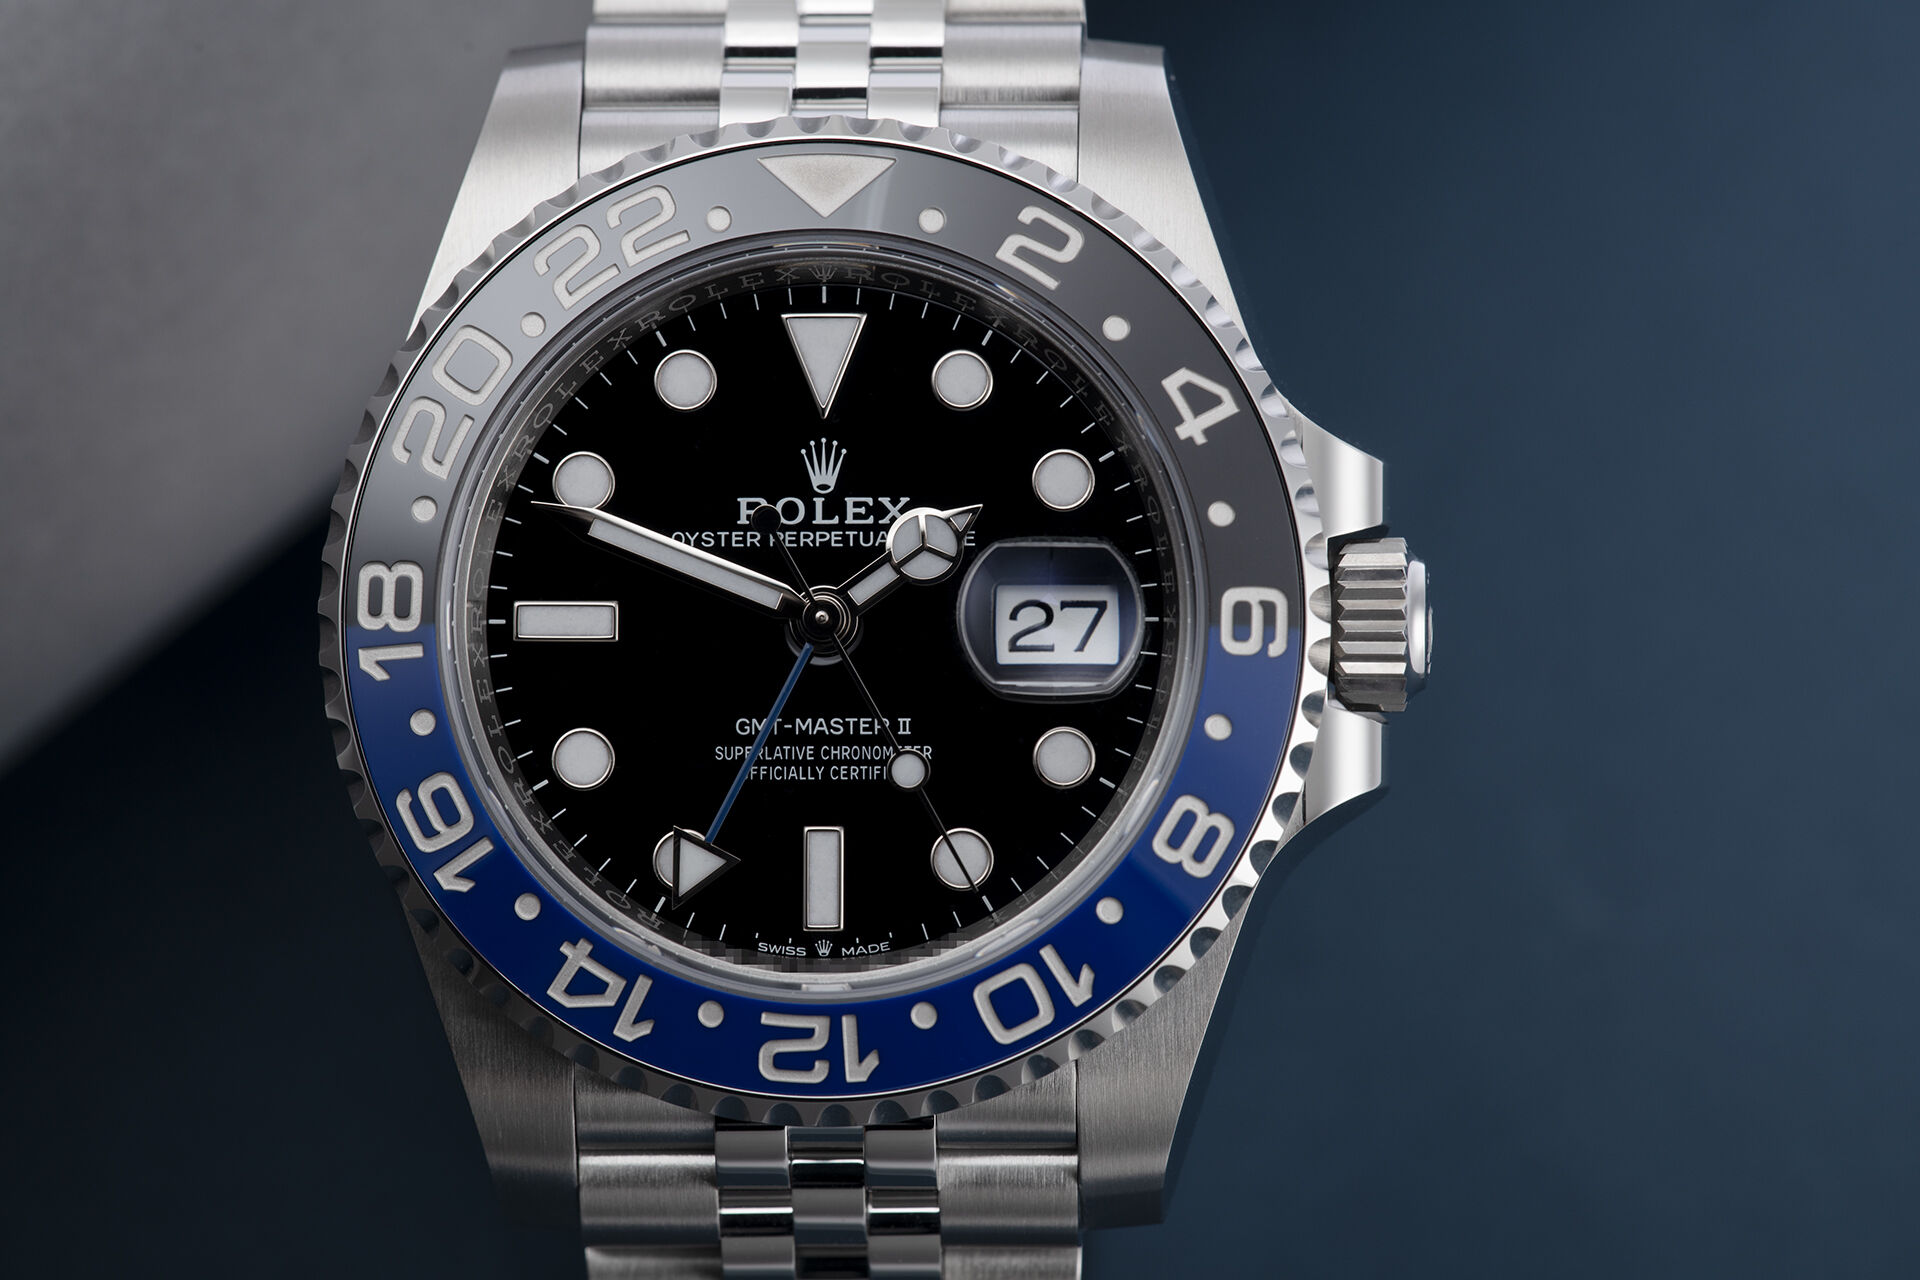 ref 126710BLNR | 4 Year Rolex Warranty  | Rolex GMT-Master II